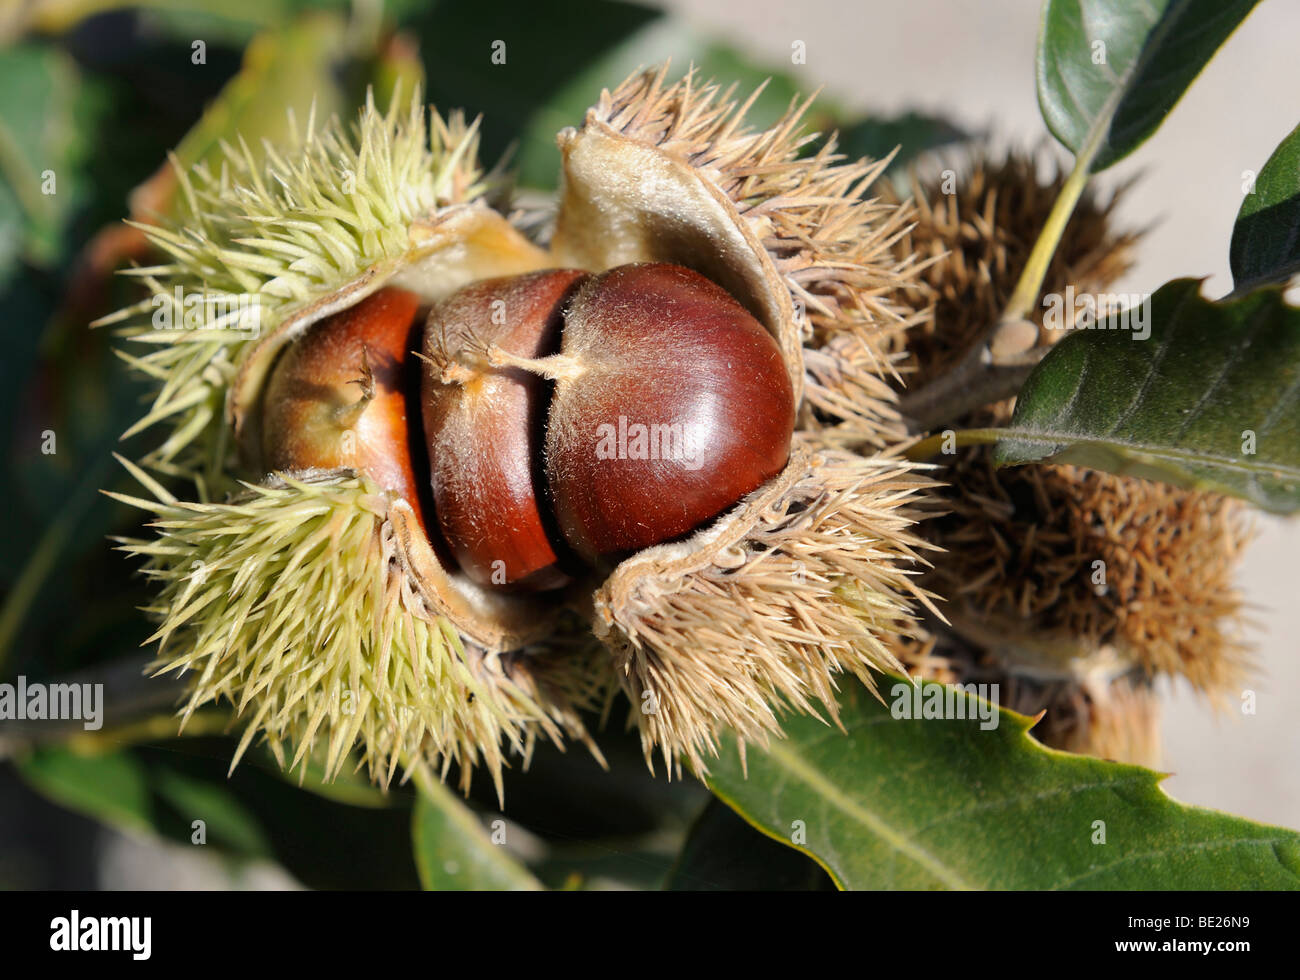 Chestnut close up. Stock Photo